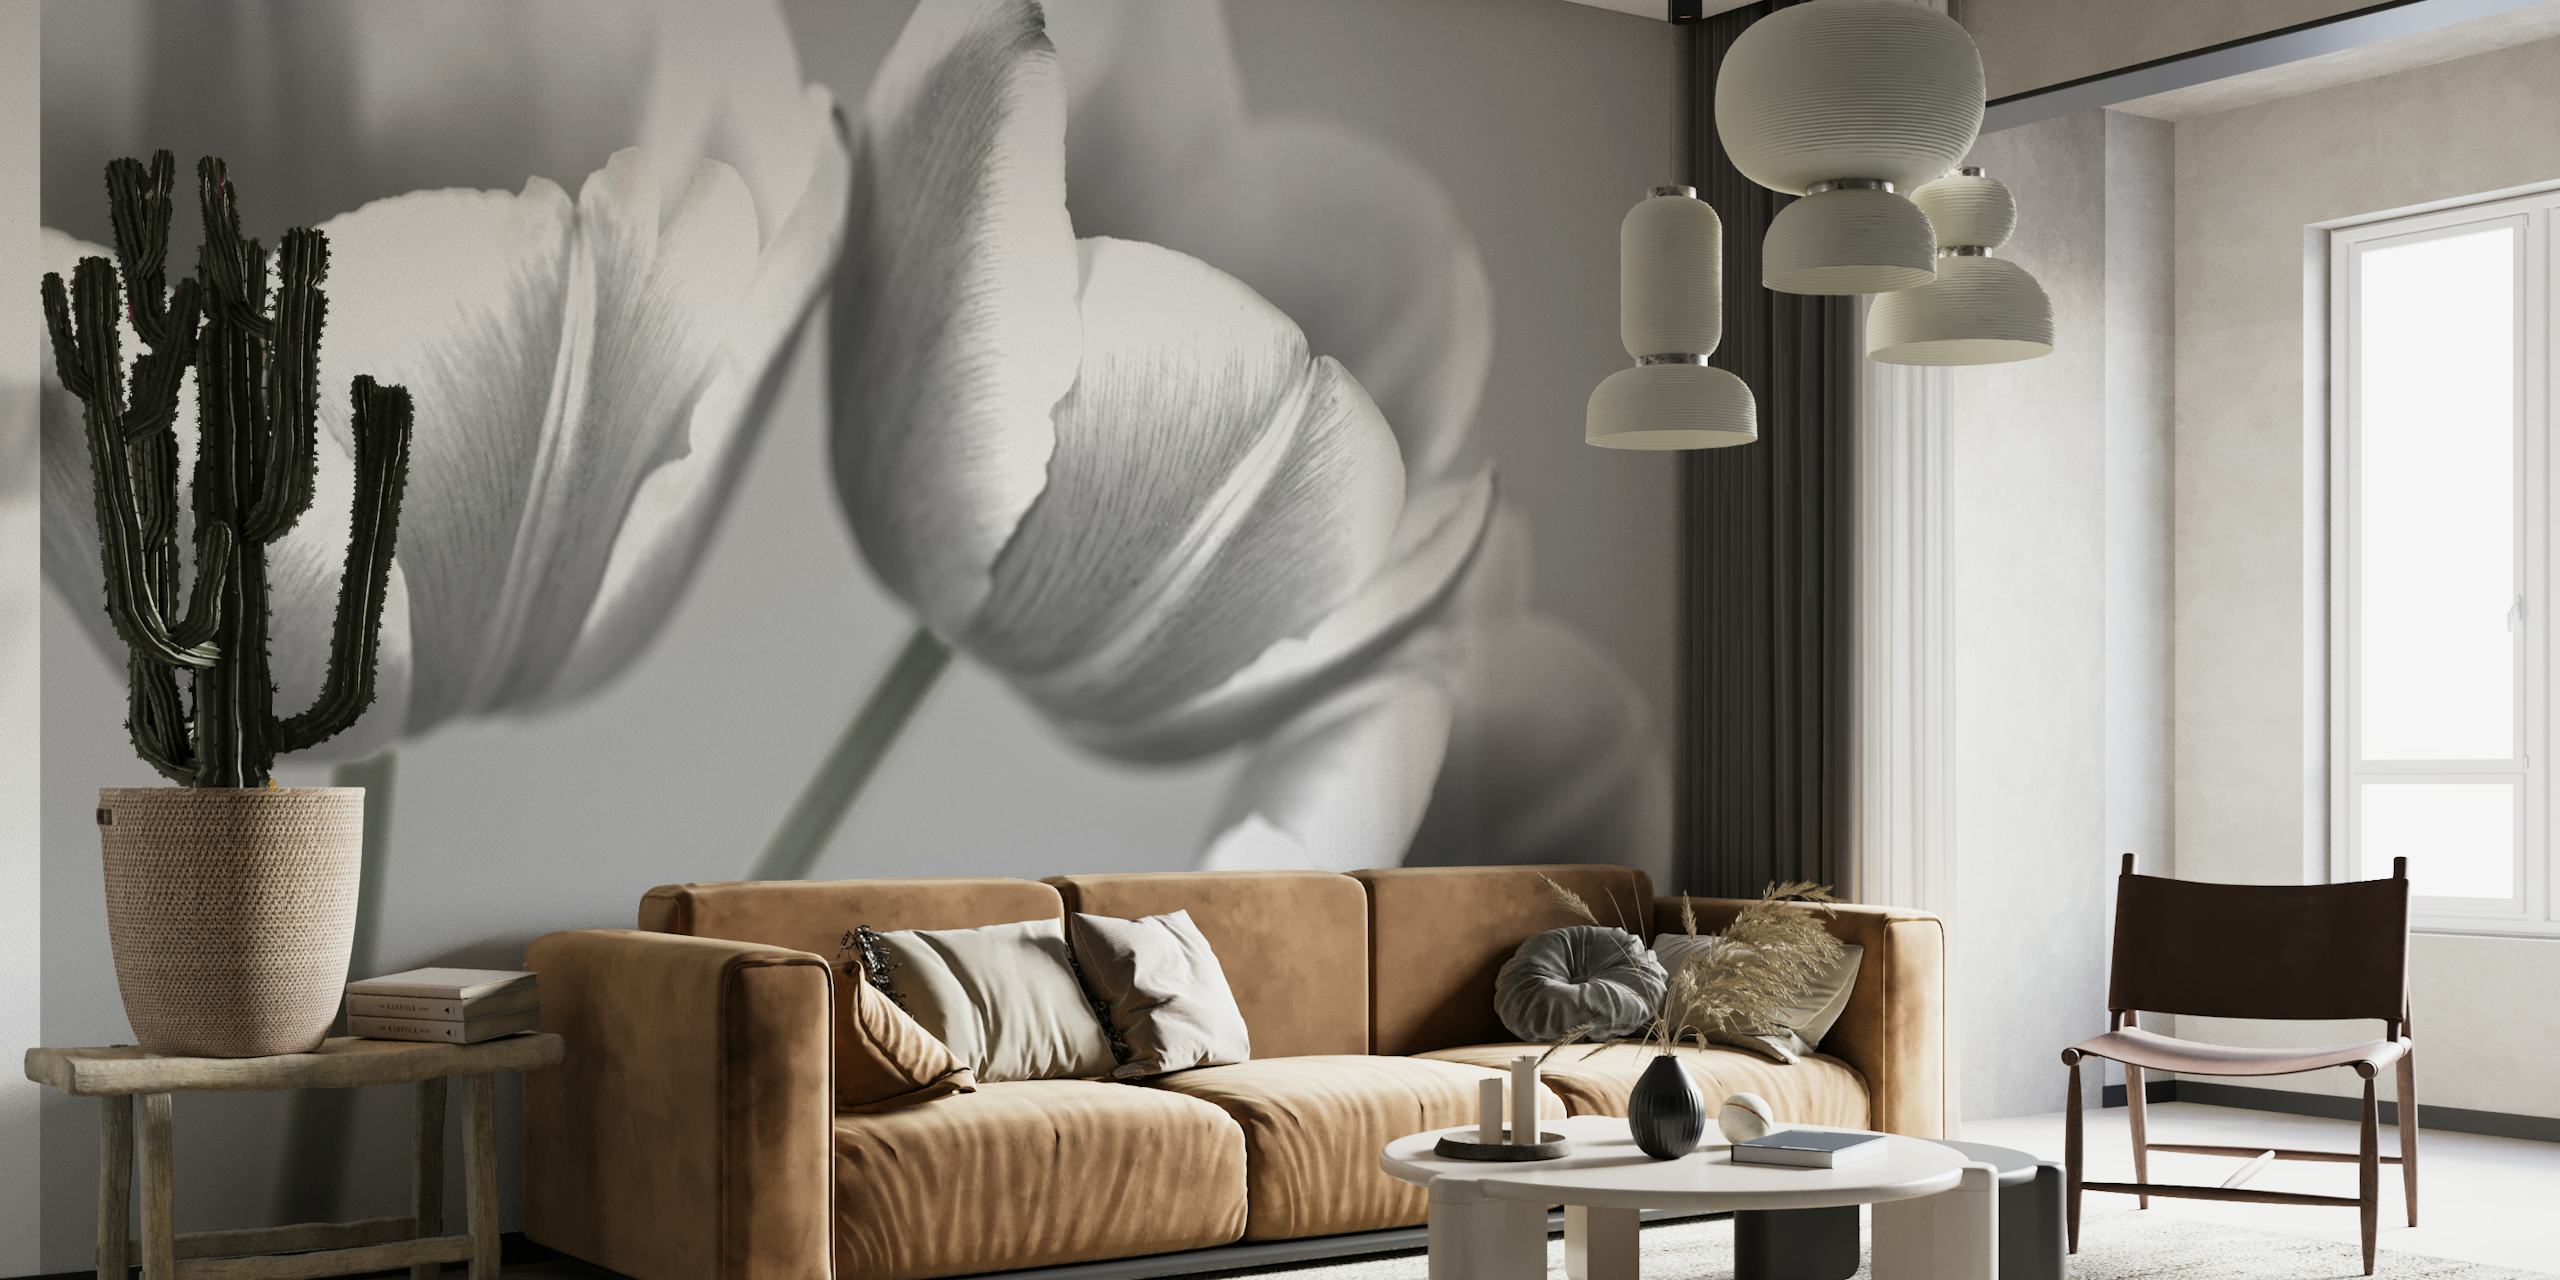 Mural de parede de tulipa preto e branco representando elegância floral sutil